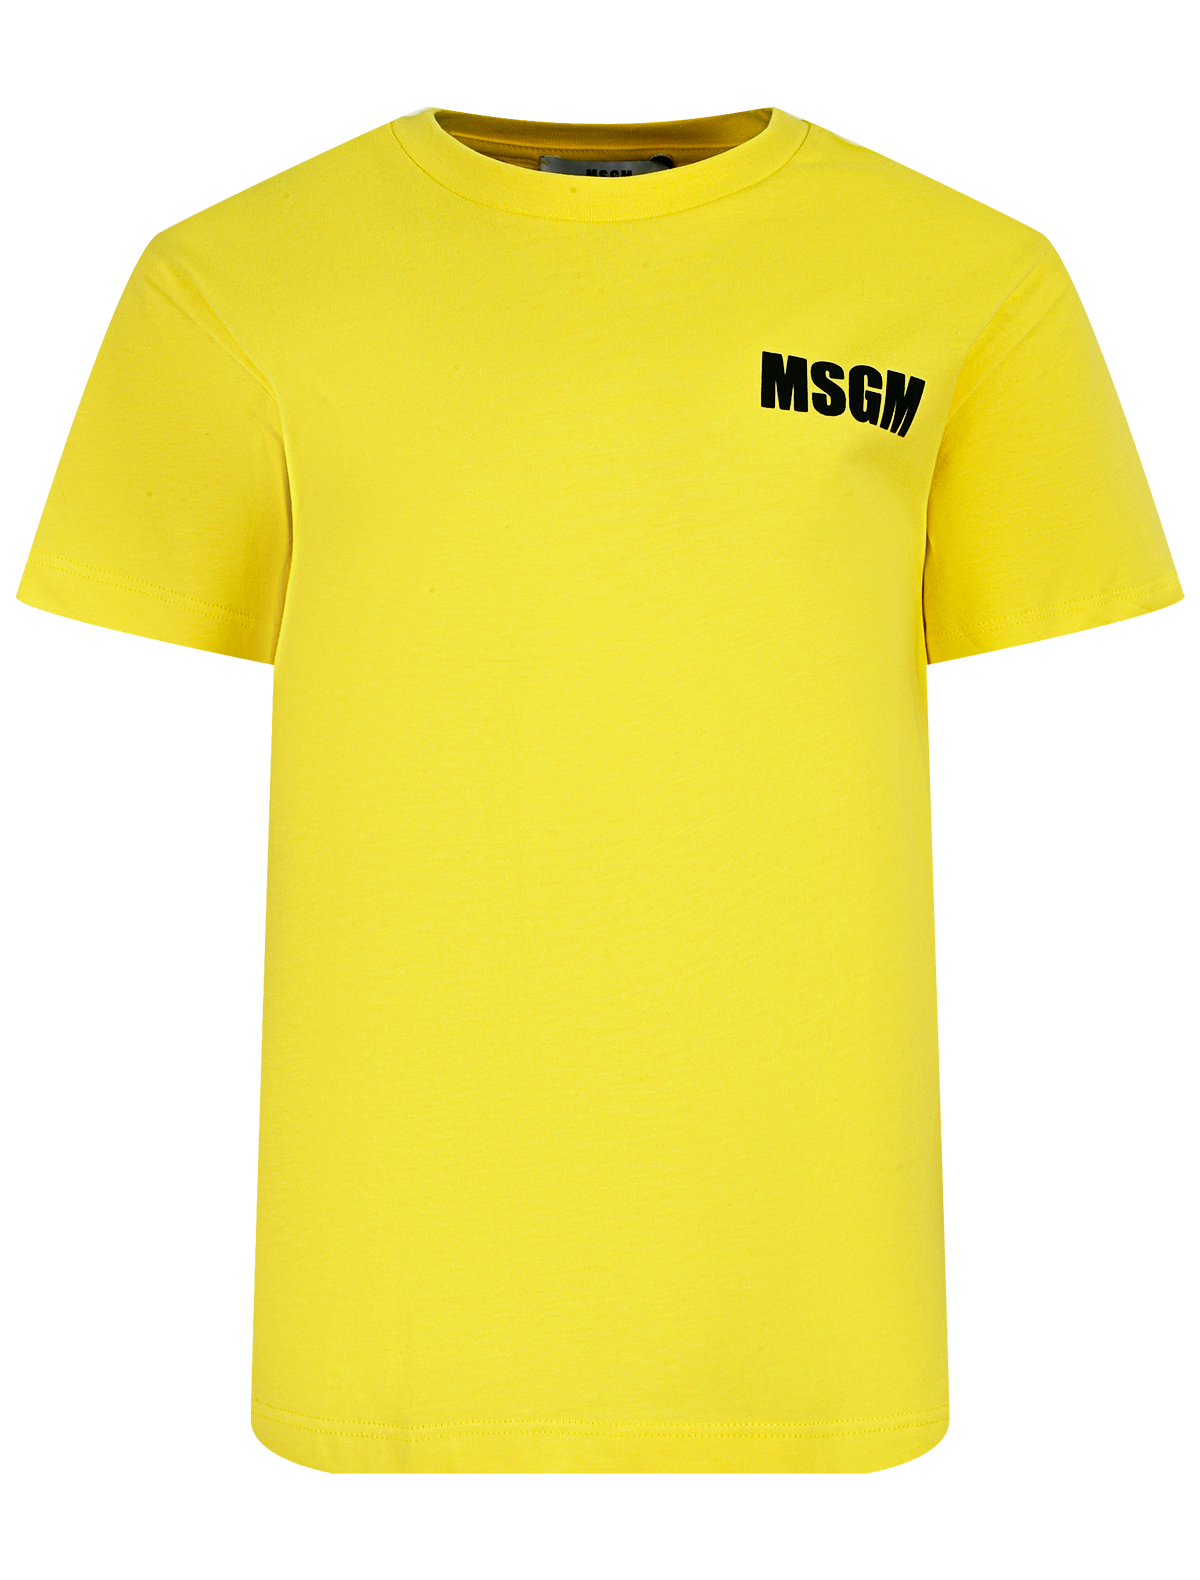 Футболка MSGM 2648593, цвет желтый, размер 13 1134529410992 - фото 1